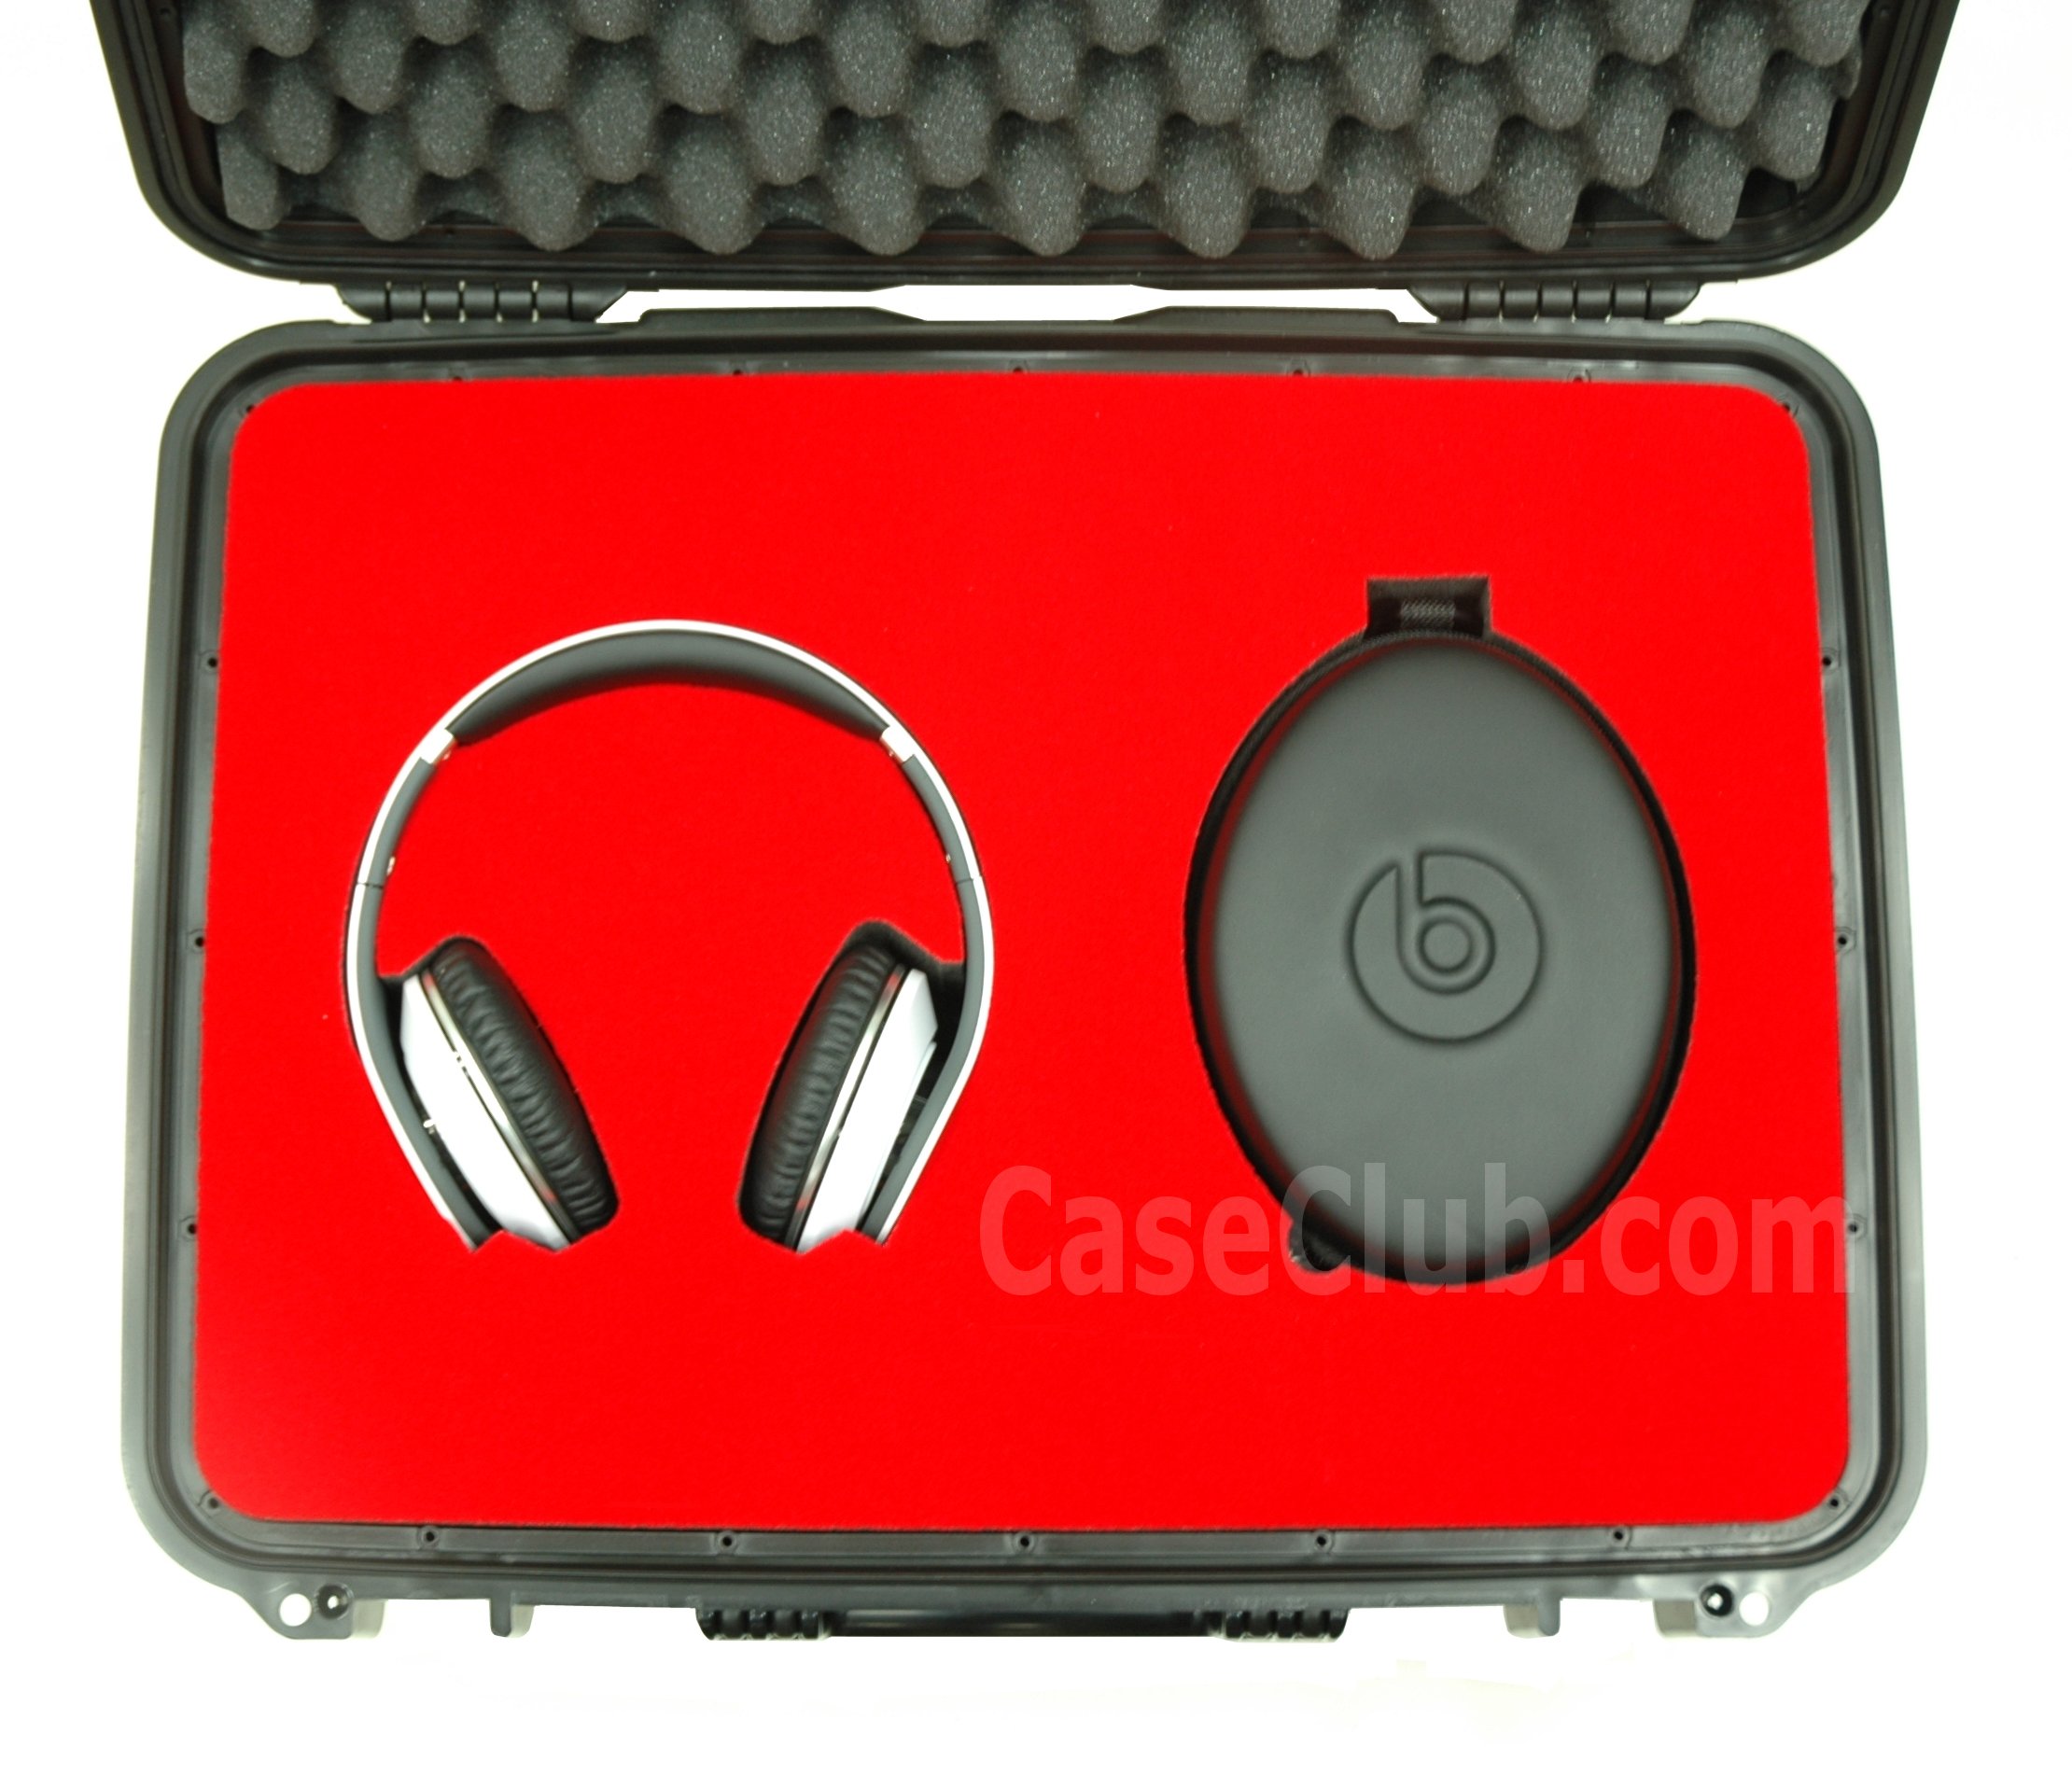 Beats by Dre Headphone Case - Case Club